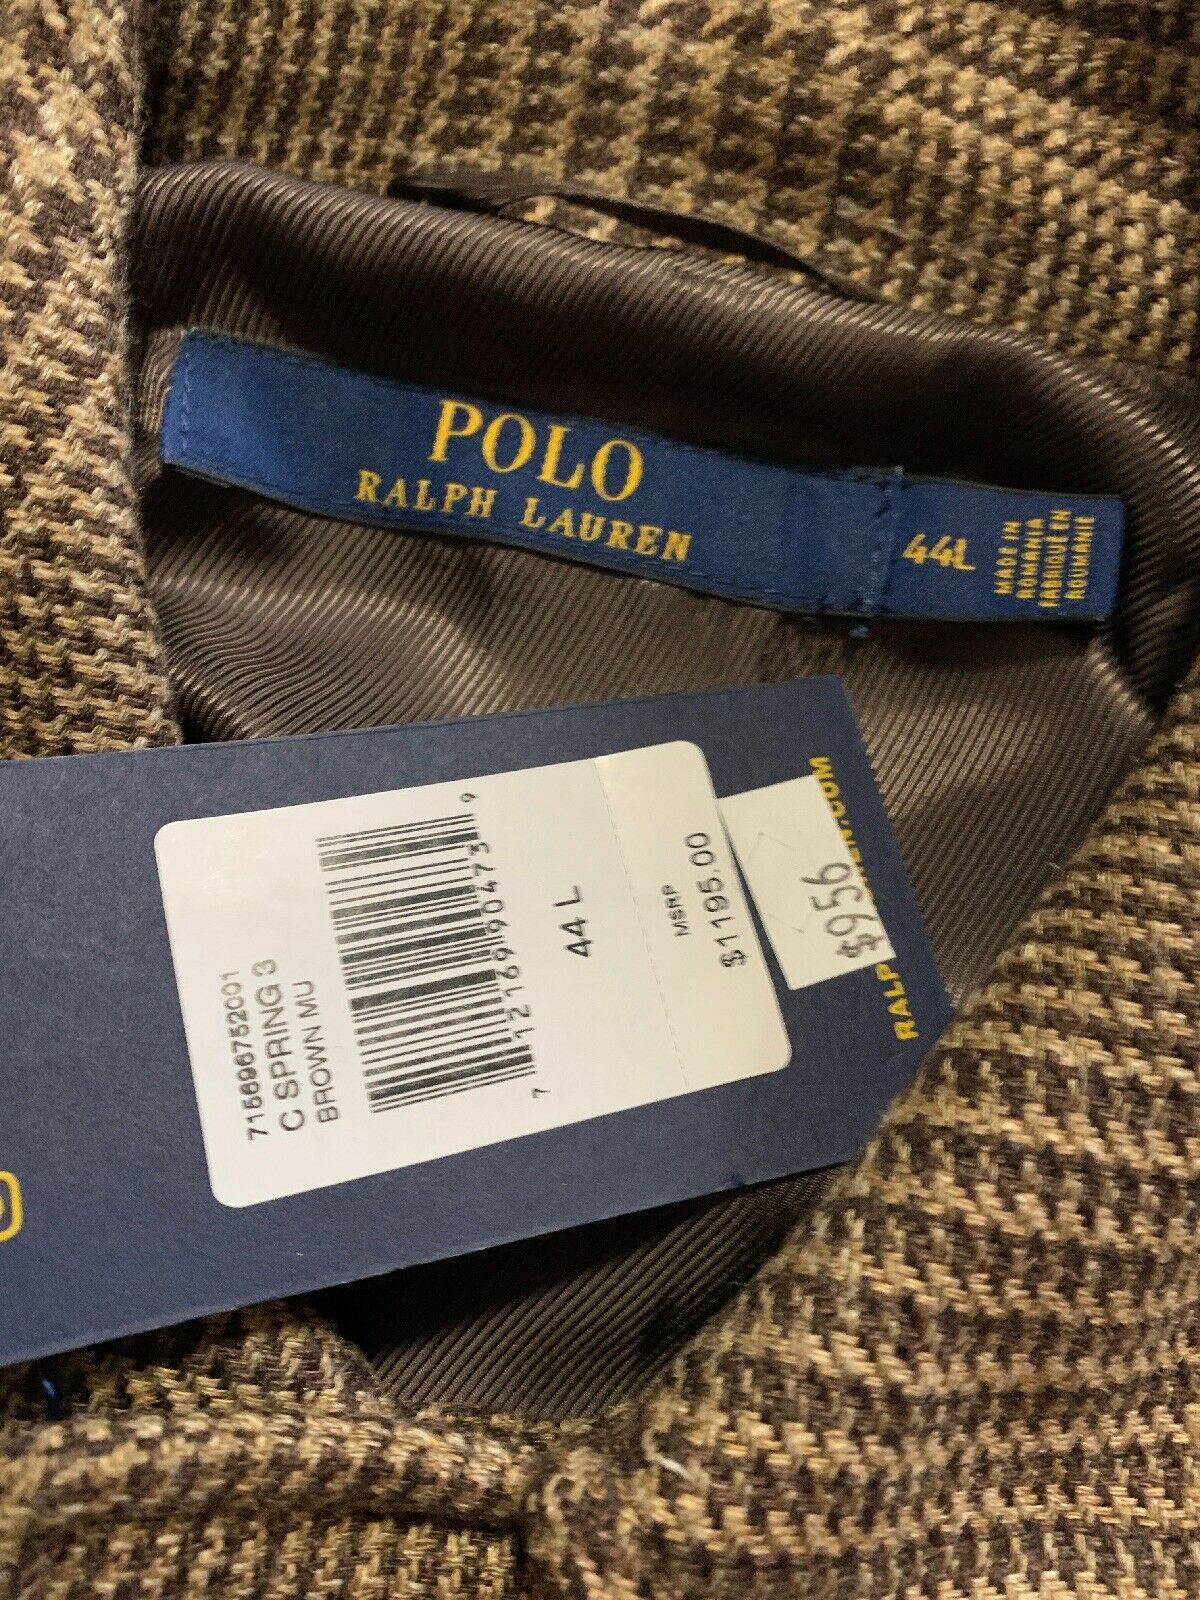 Neu$1195 Polo Ralph Lauren Herren-Mantel aus Leinen/Seide, Trenchcoat, Braun, 44L US